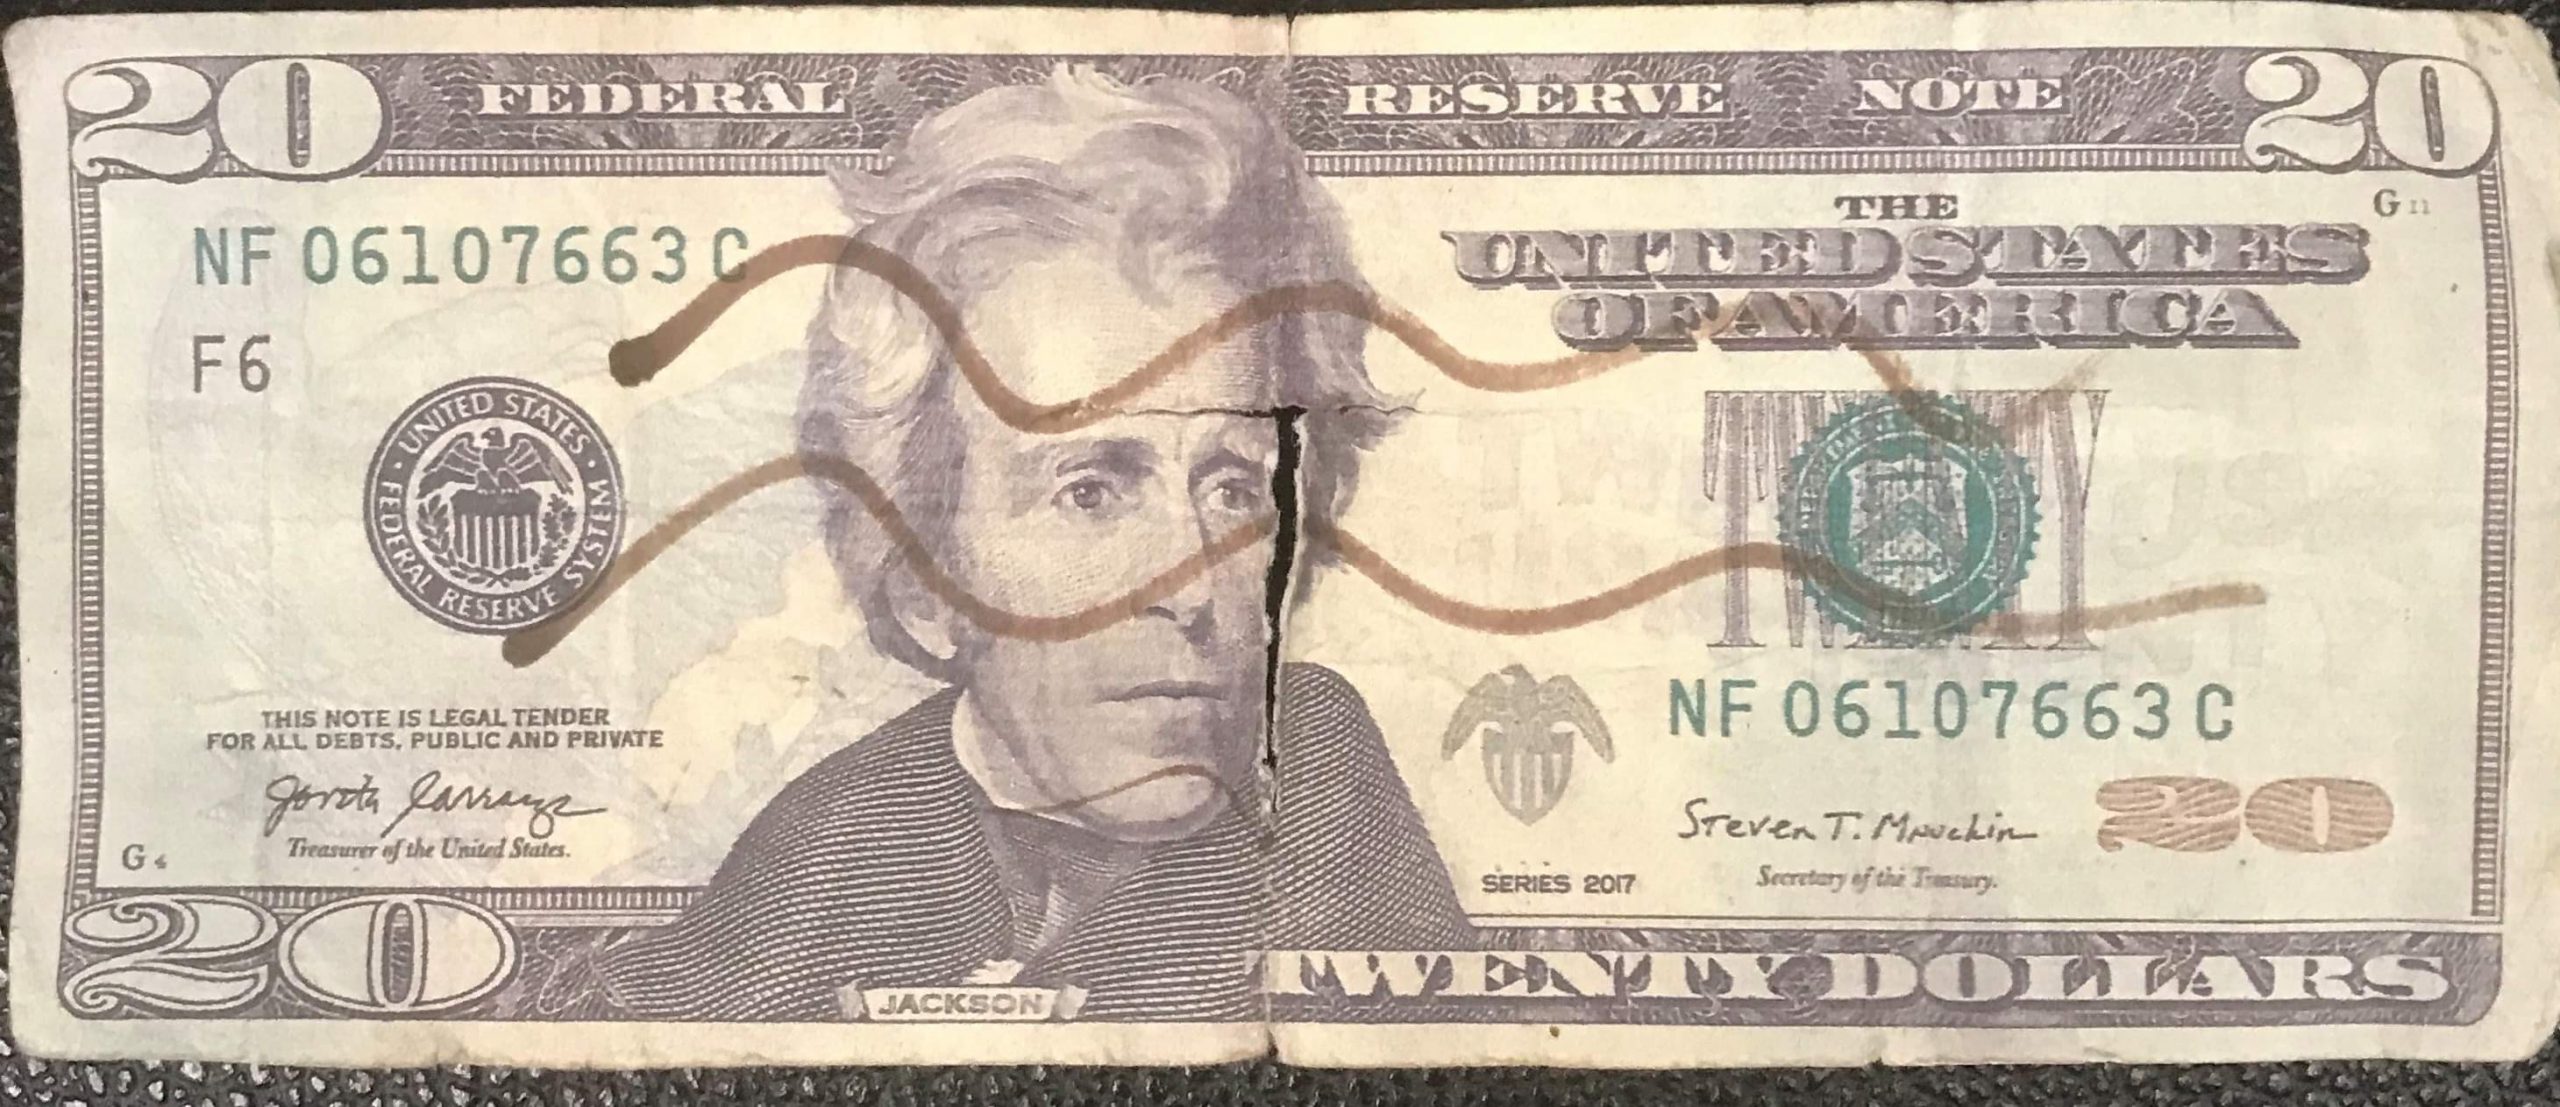 20 dollar bill serial number doesnt match